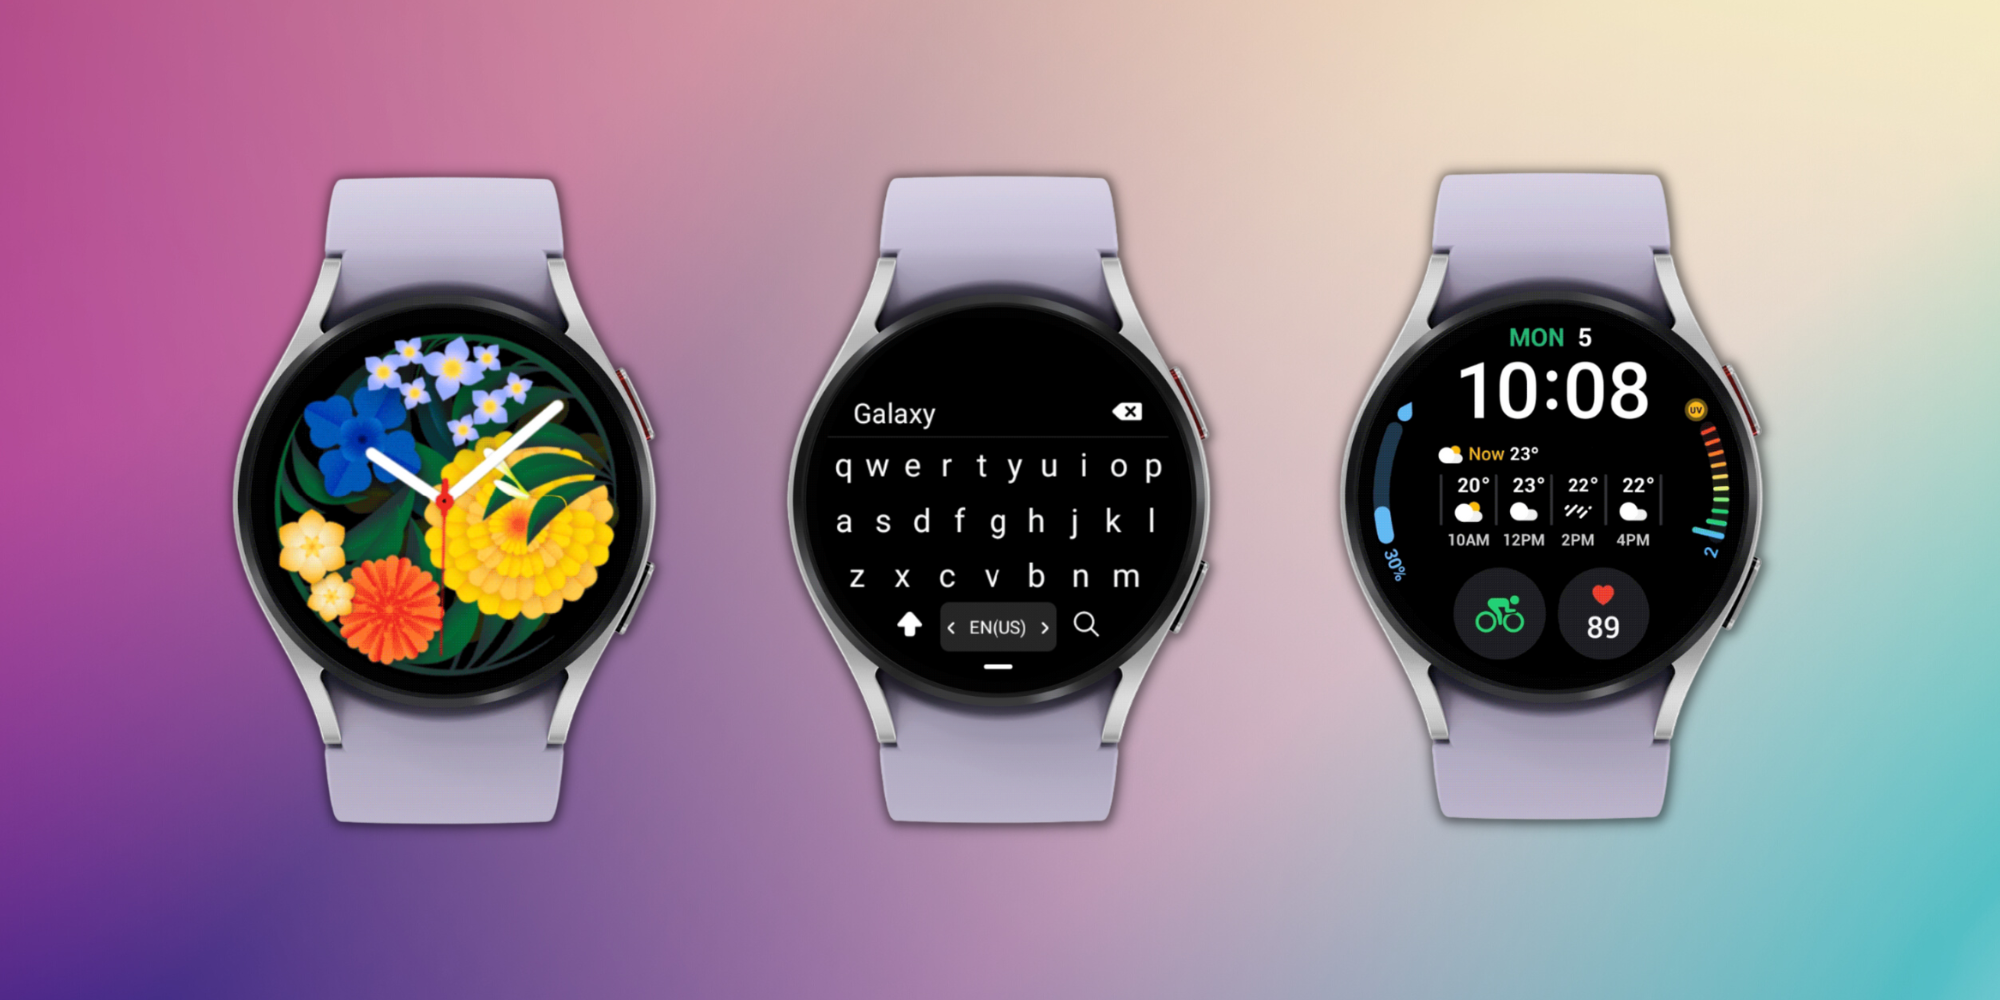 One UI Watch 4.5 update on the Galaxy Watch 4